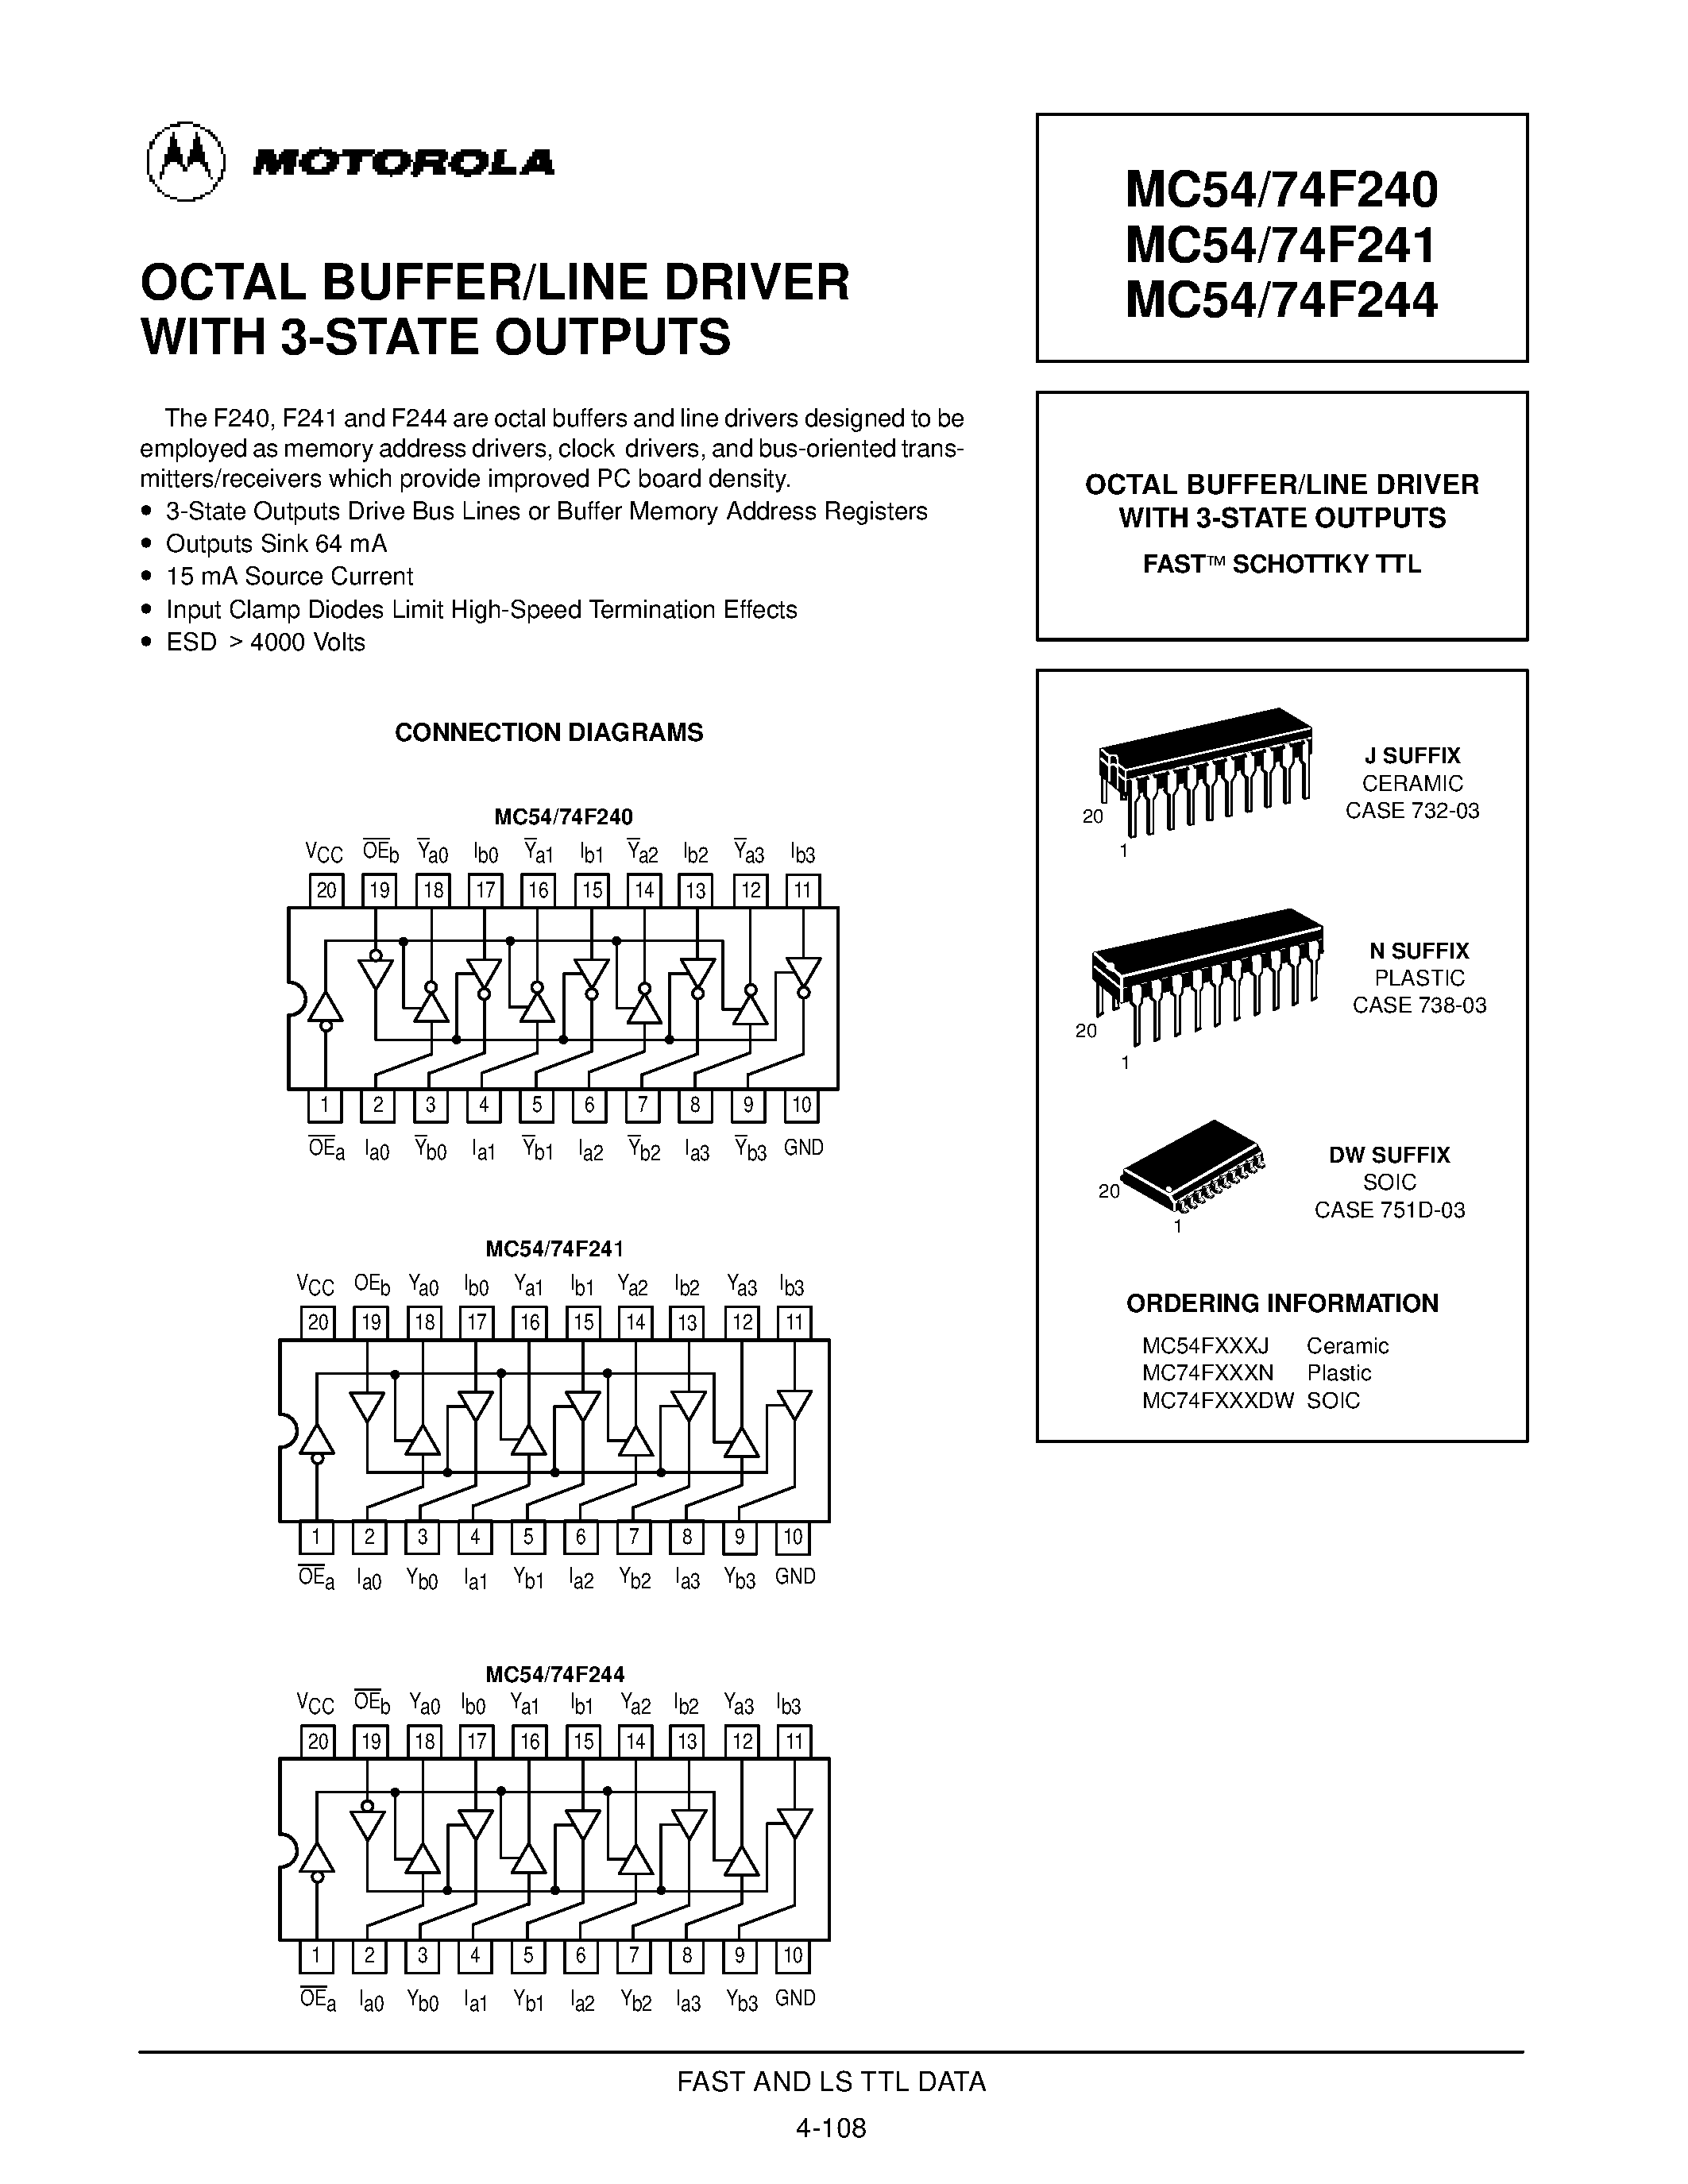 Datasheet MC74F241 - (MC74F240 - MC74F244) OCTAL BUFFER/LINE DRIVER WITH 3-STATE OUTPUTS FAST SCHOTTKY TTL page 1